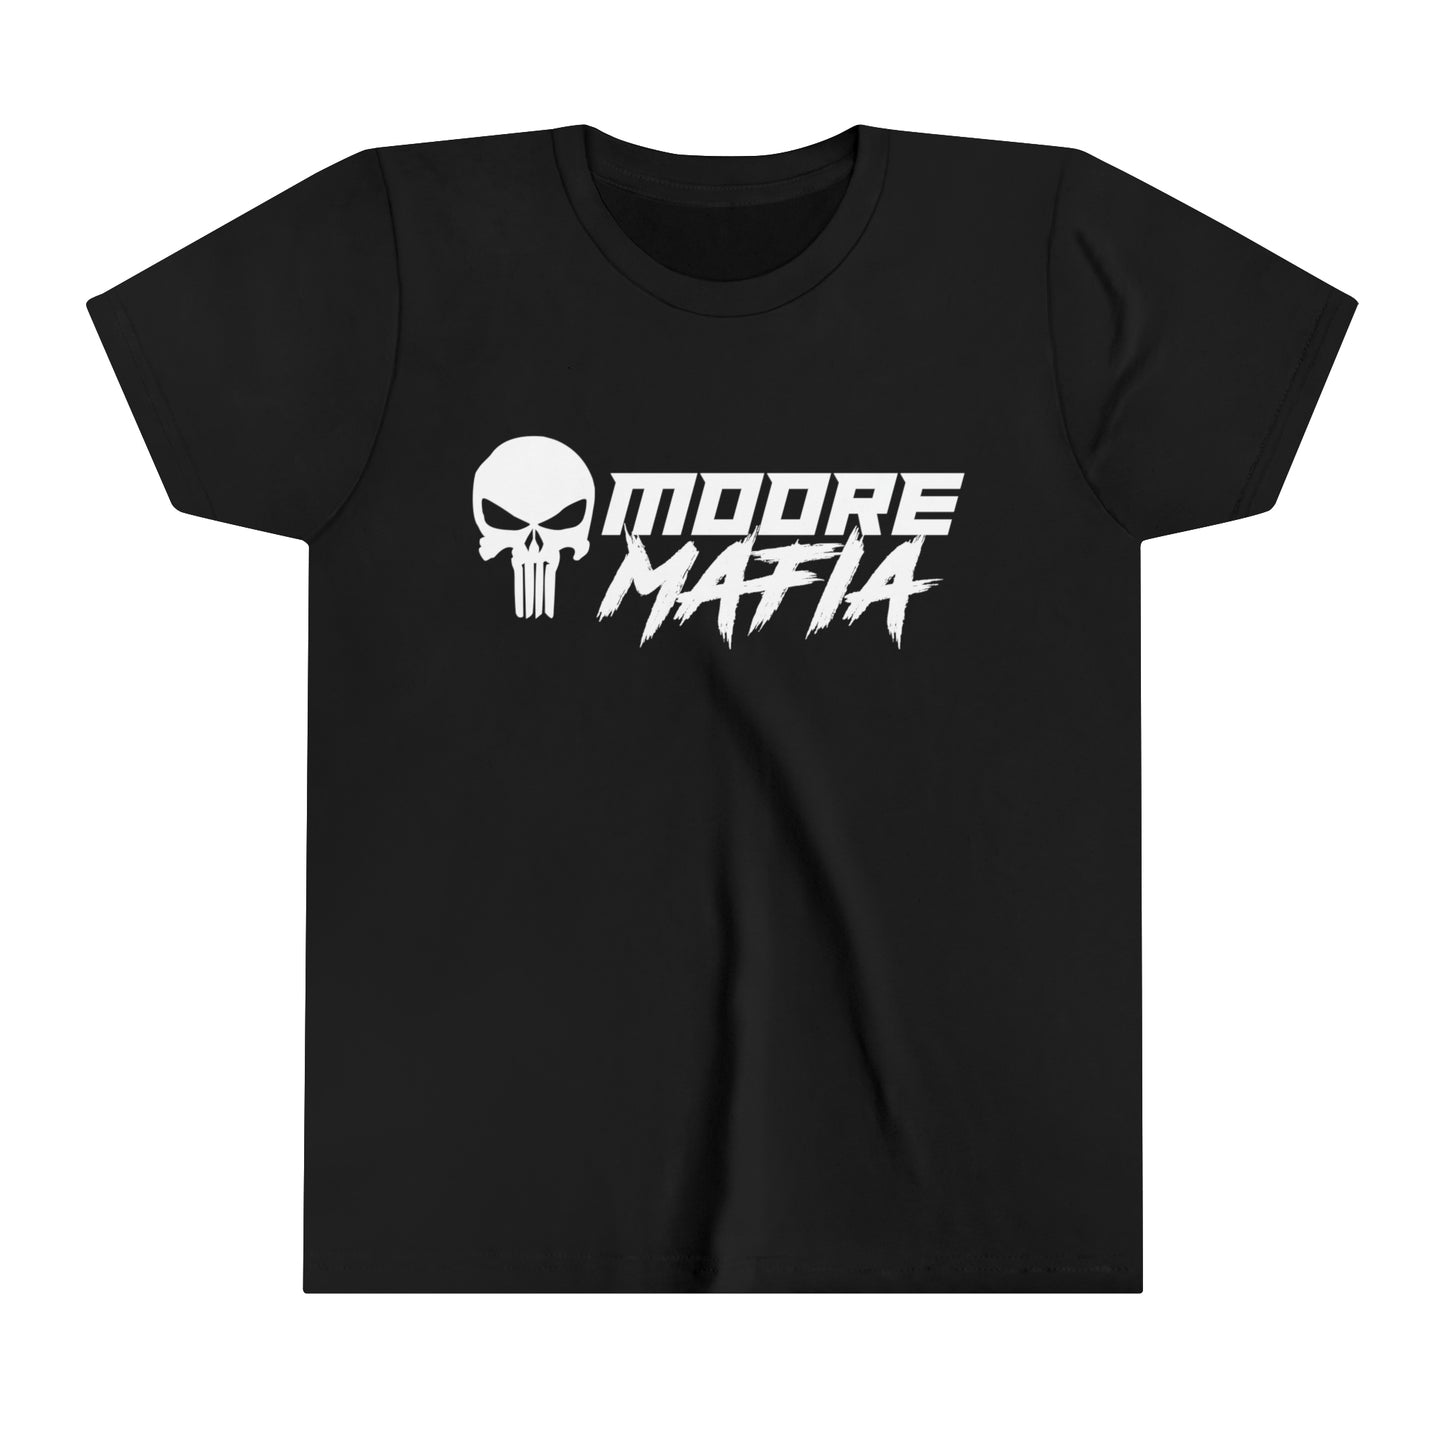 Gapplebee's Youth Short Sleeve T-Shirt